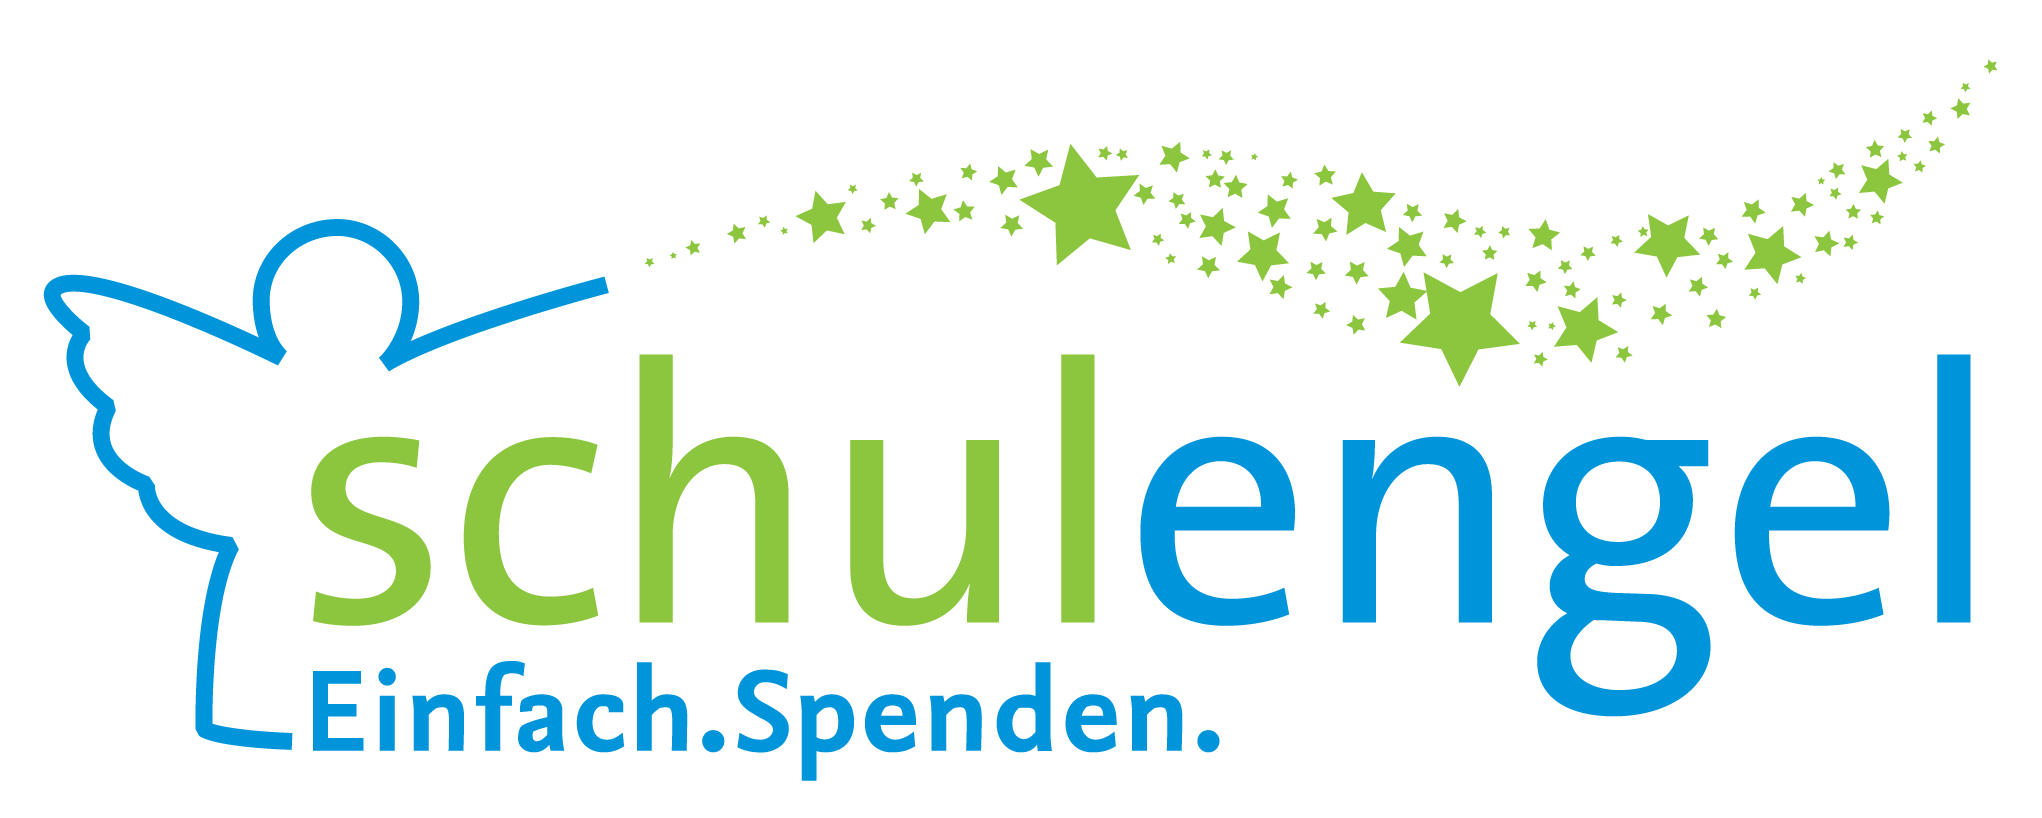 Schulengel (Logo)